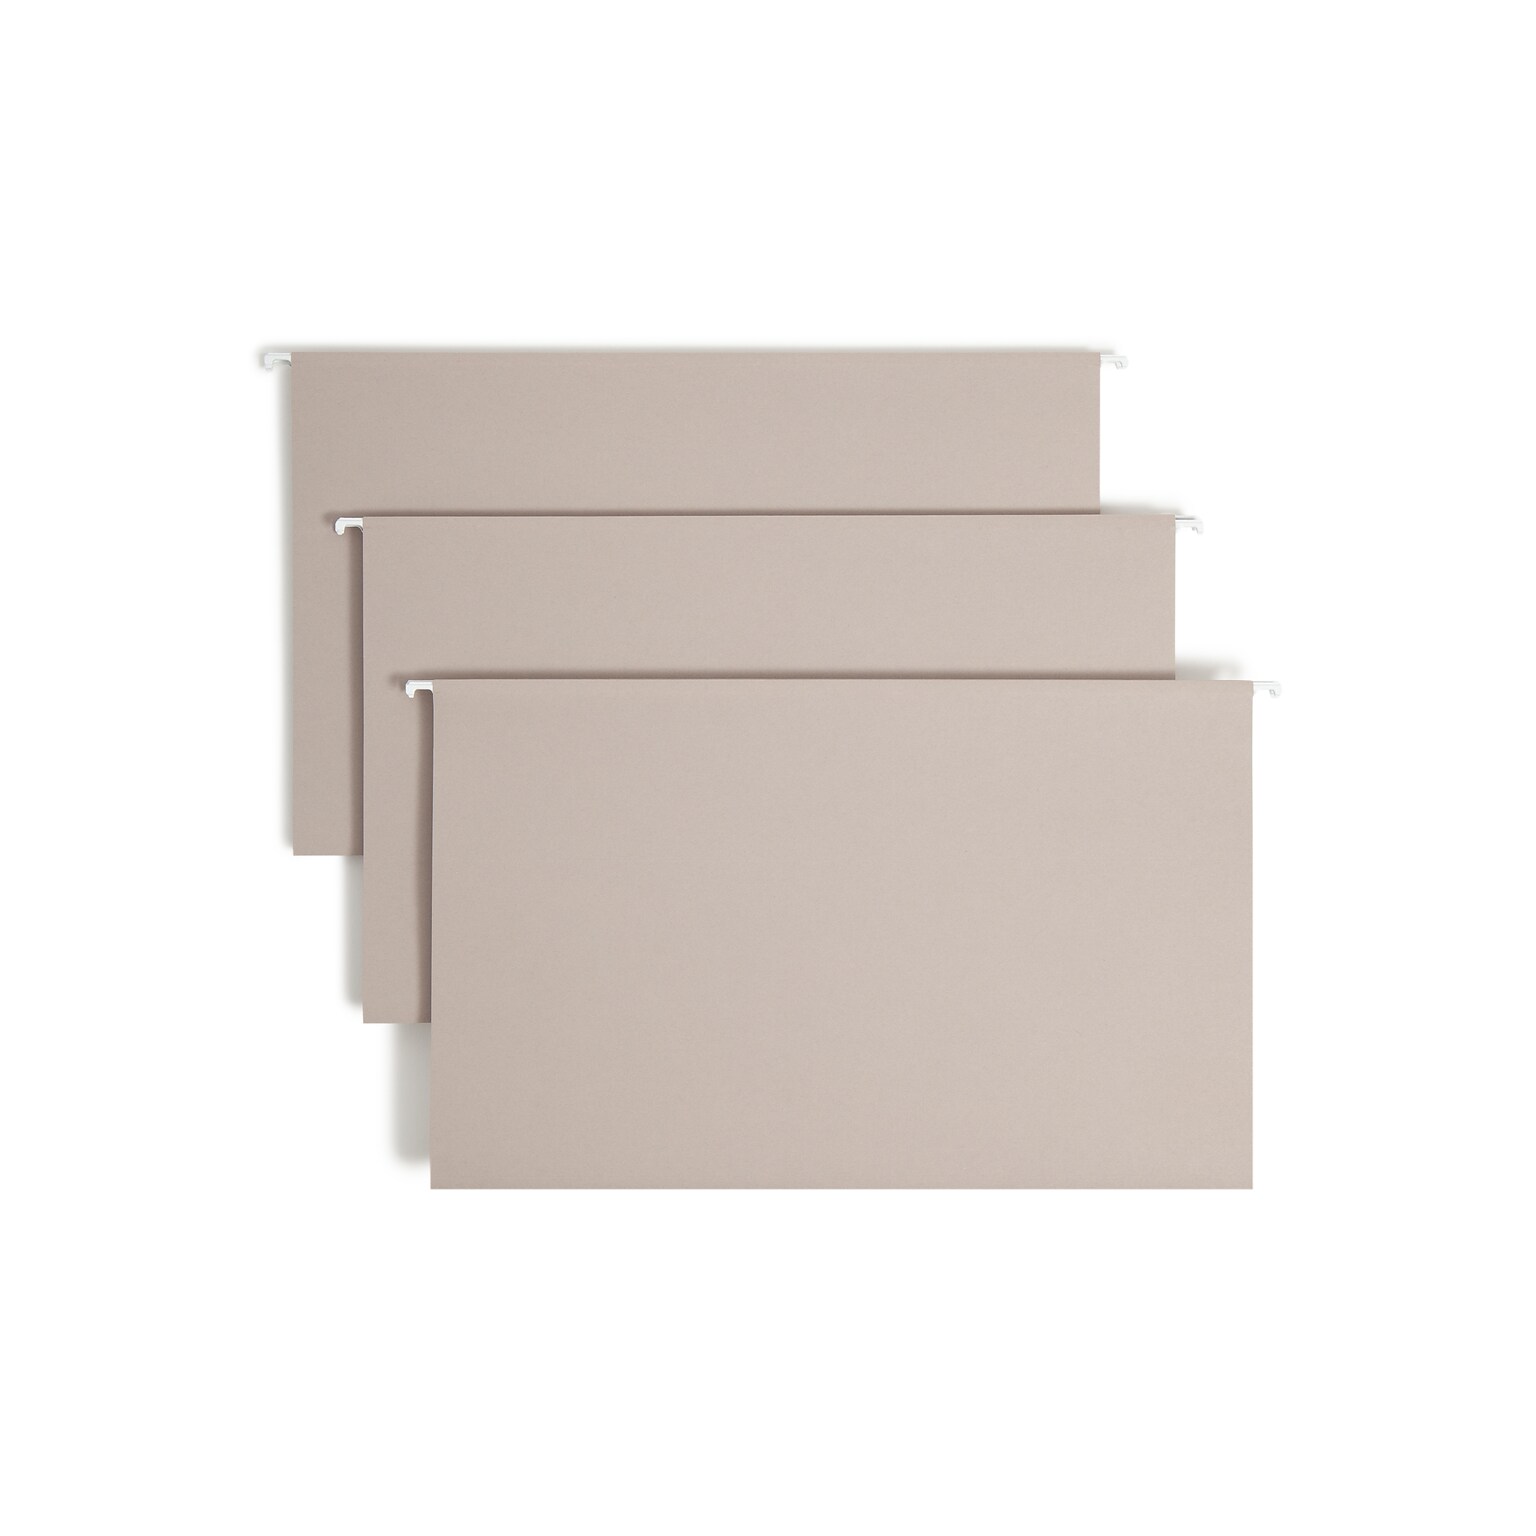 Smead Heavy Duty TUFF Recycled Hanging File Folder, 3-Tab Tab, Legal Size, Steel Gray, 18/Box (64093)